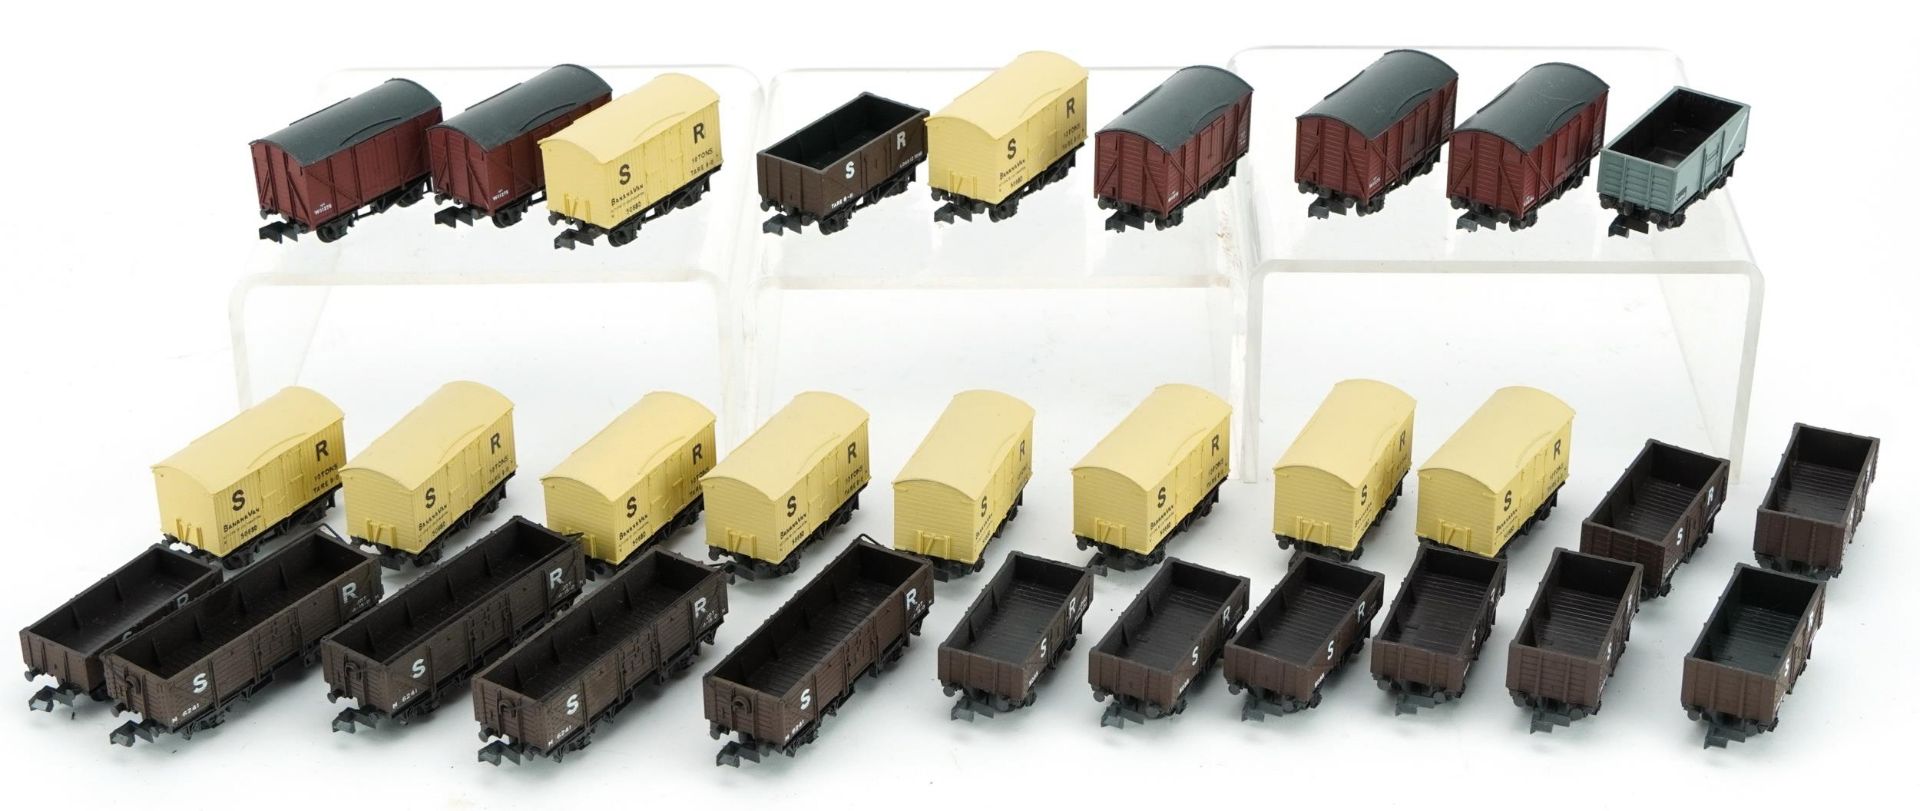 Thirty Peco N gauge model railway wagons